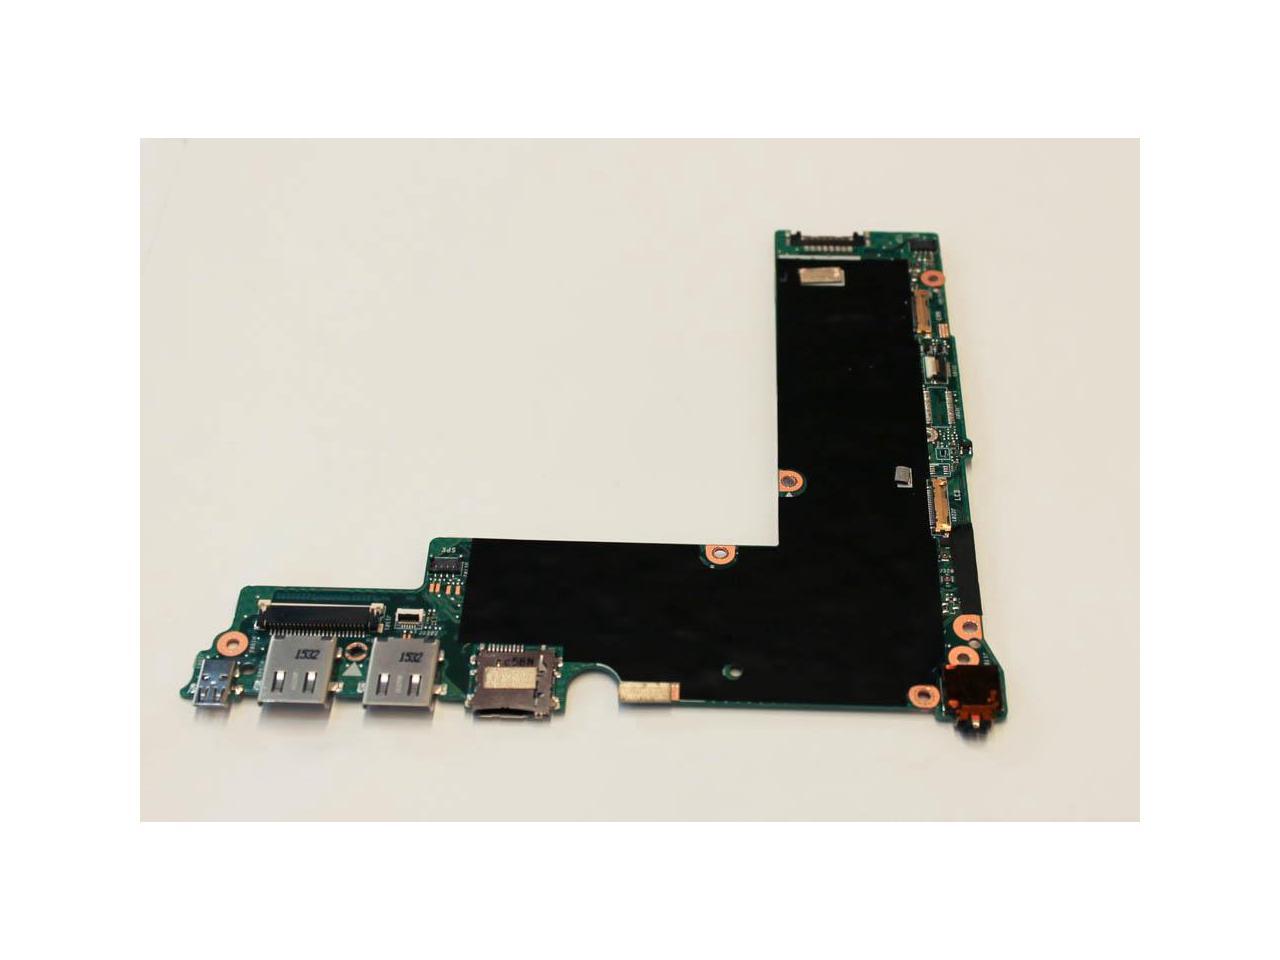 60NL0970-MB1220 Asus Flip C100PA Chromebook Motherbaord 4GB/16GB SSD w/ Rockchip RK3288C 1.8GHz CPU